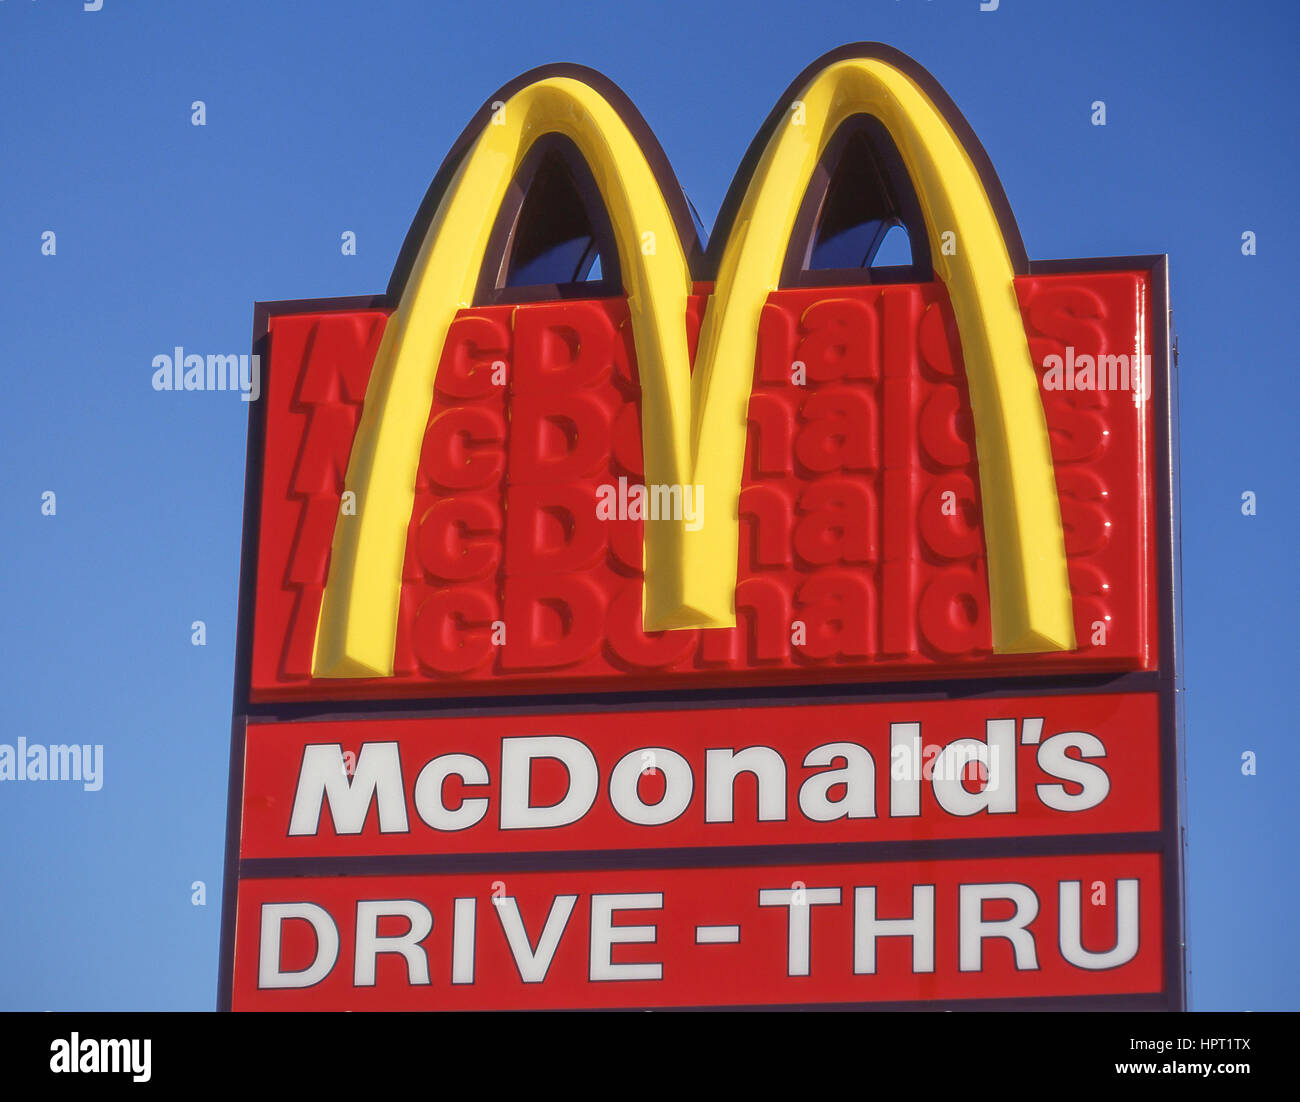 McDonald's Drive-Thru restaurant sign, Miami, Florida, United States of America Stock Photo